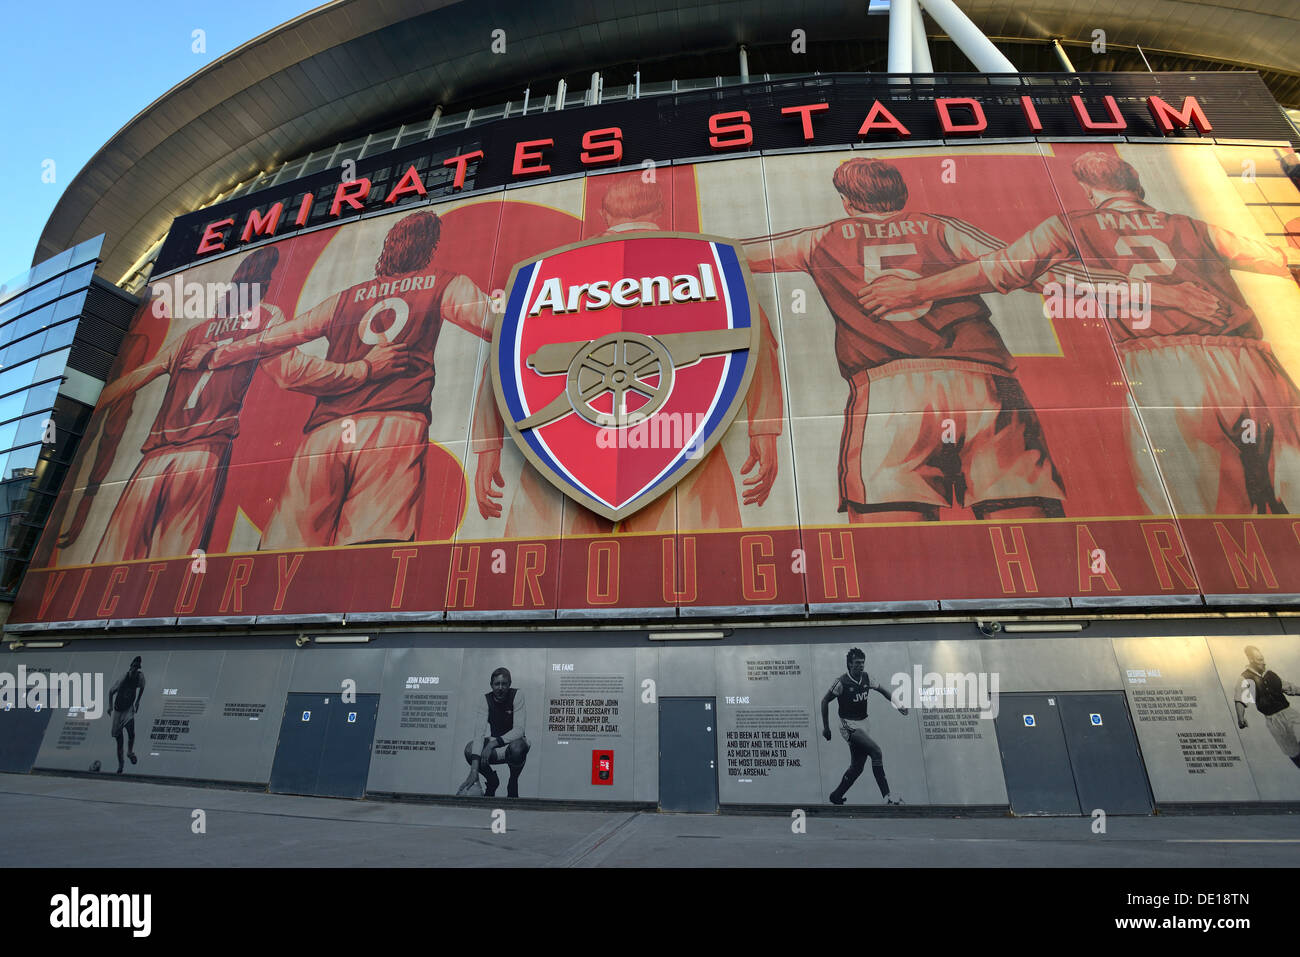 Emirates stadium at Arsenal Stock Photo